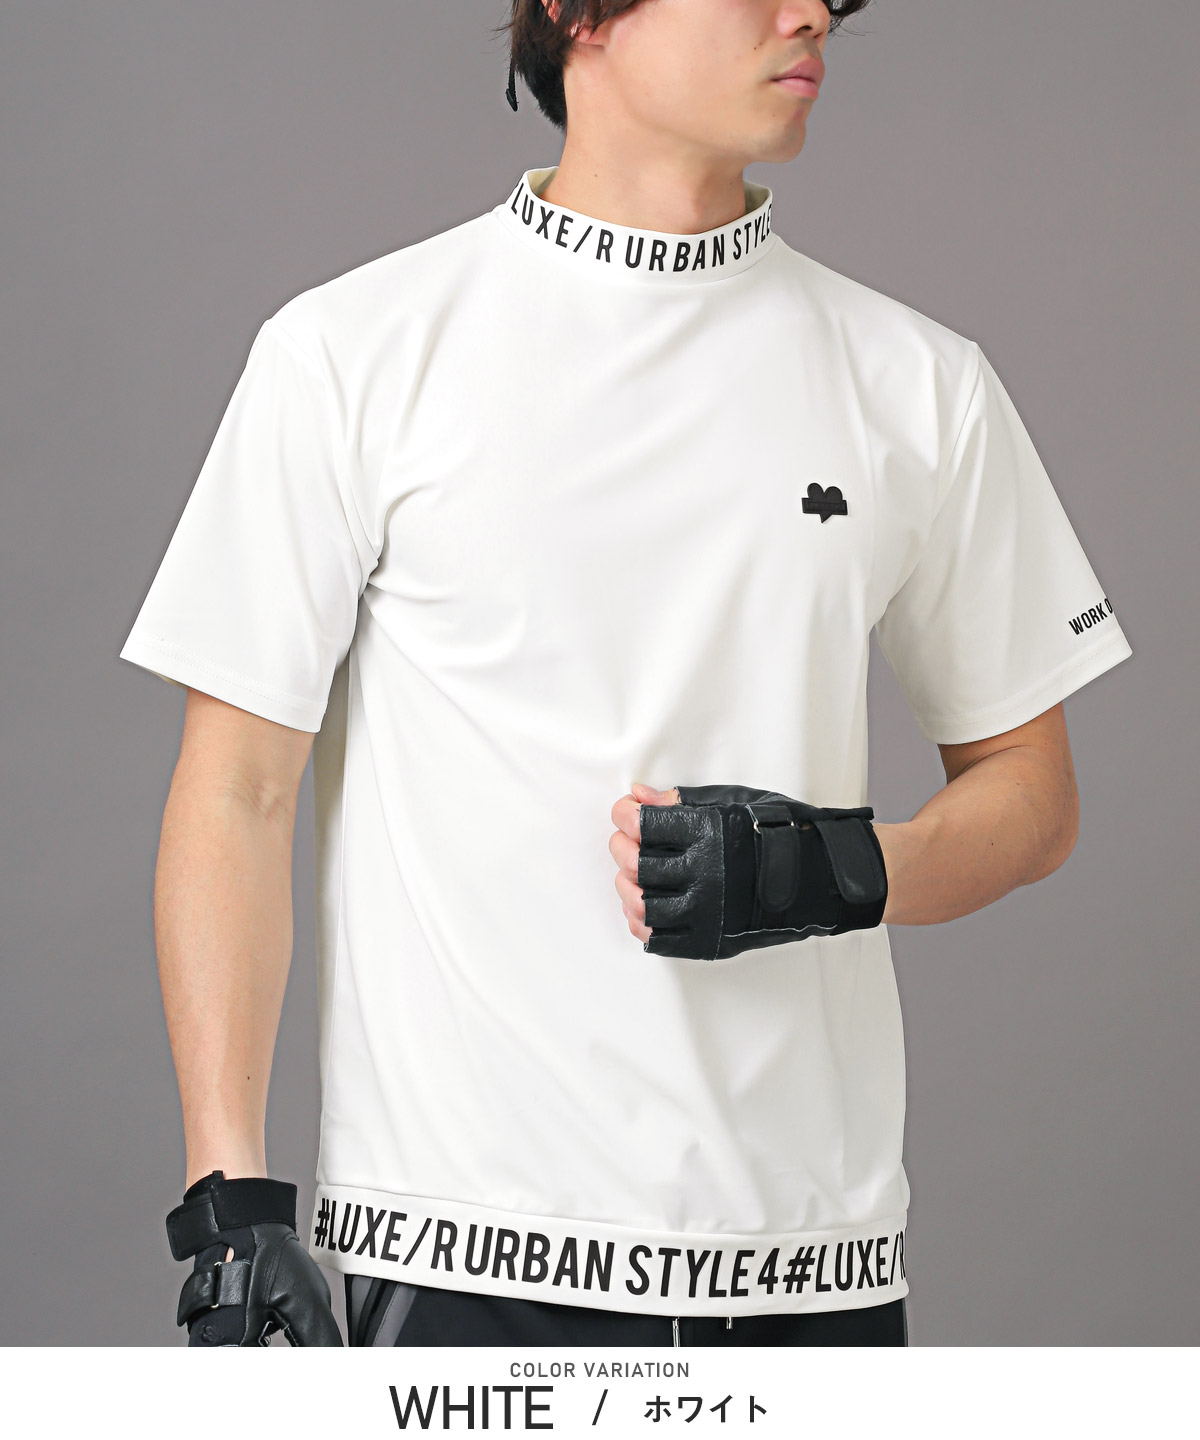 Tシャツ メンズ モックネック ゴルフウェア ロゴ ストレッチ 伸縮 接触冷感 速乾 半袖